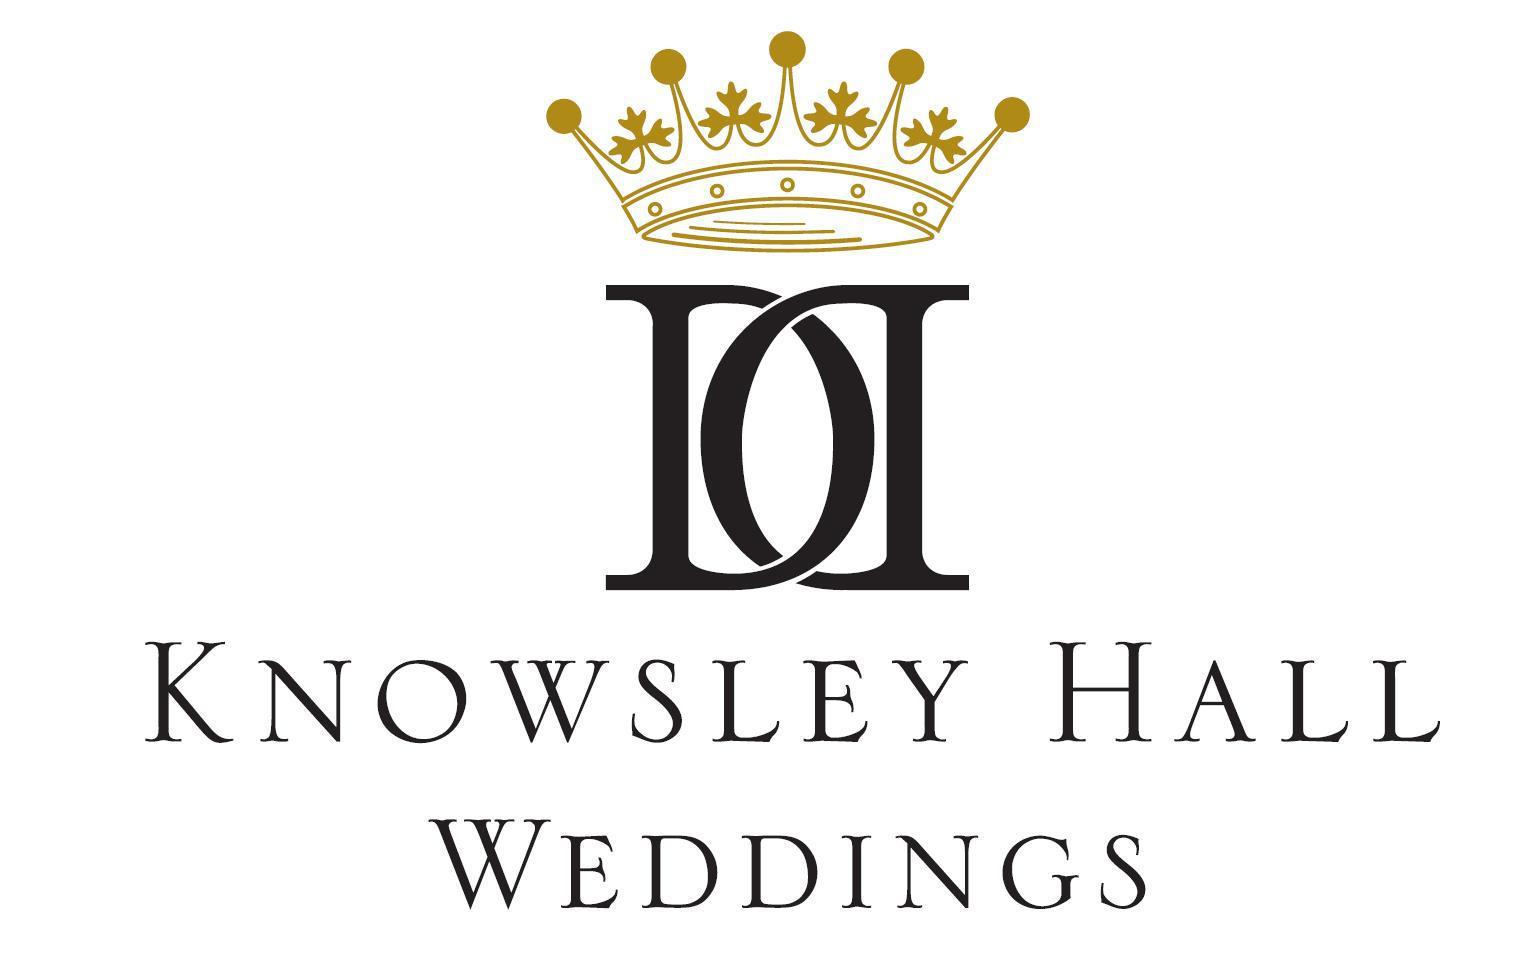 Hall Logo - Knowsley Hall Weddings | County Brides